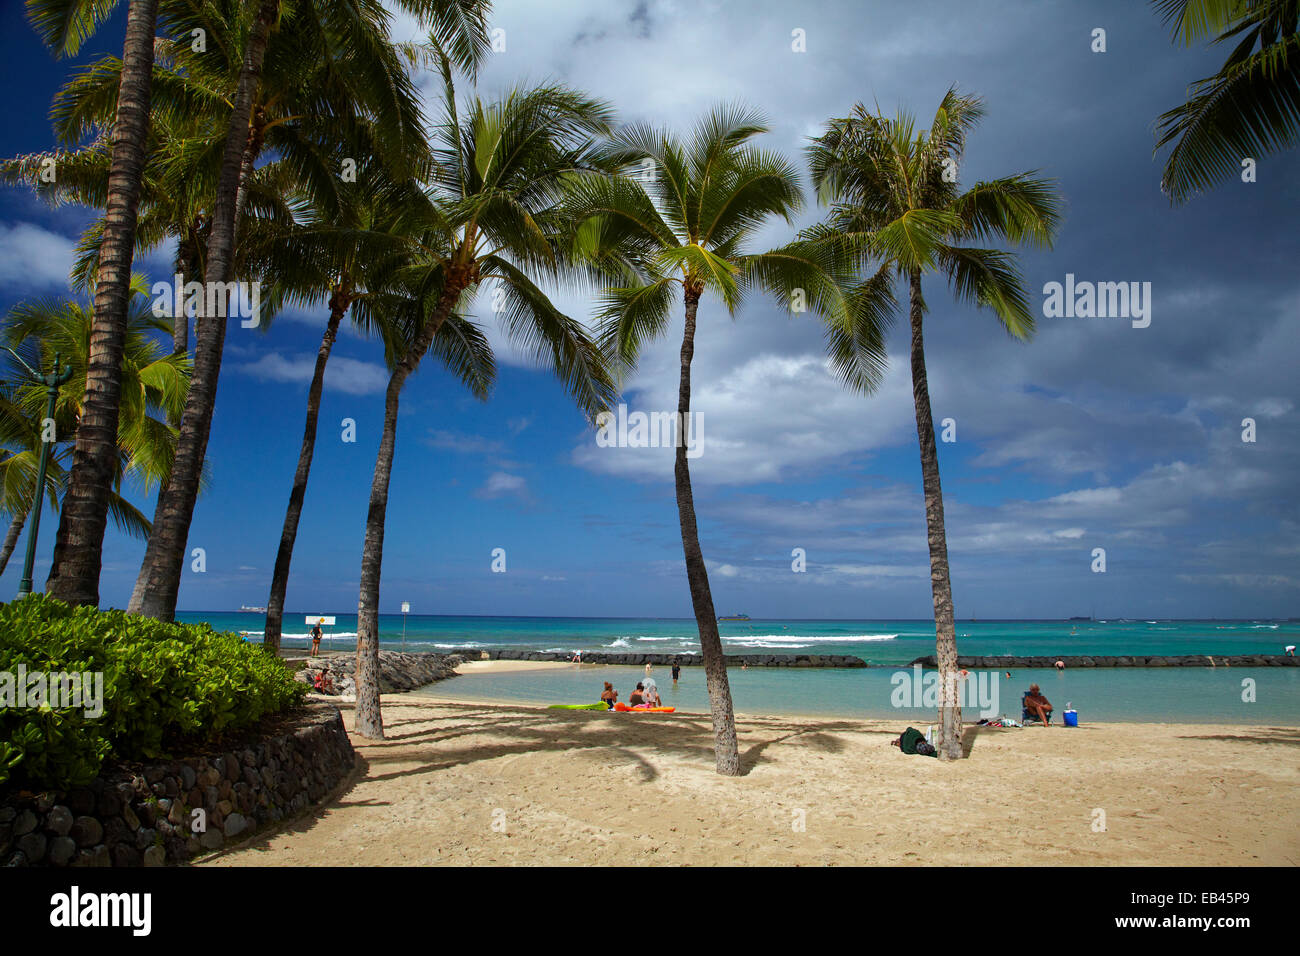 La plage de Waikiki et de palmiers, Waikiki, Honolulu, Oahu, Hawaii, USA Banque D'Images